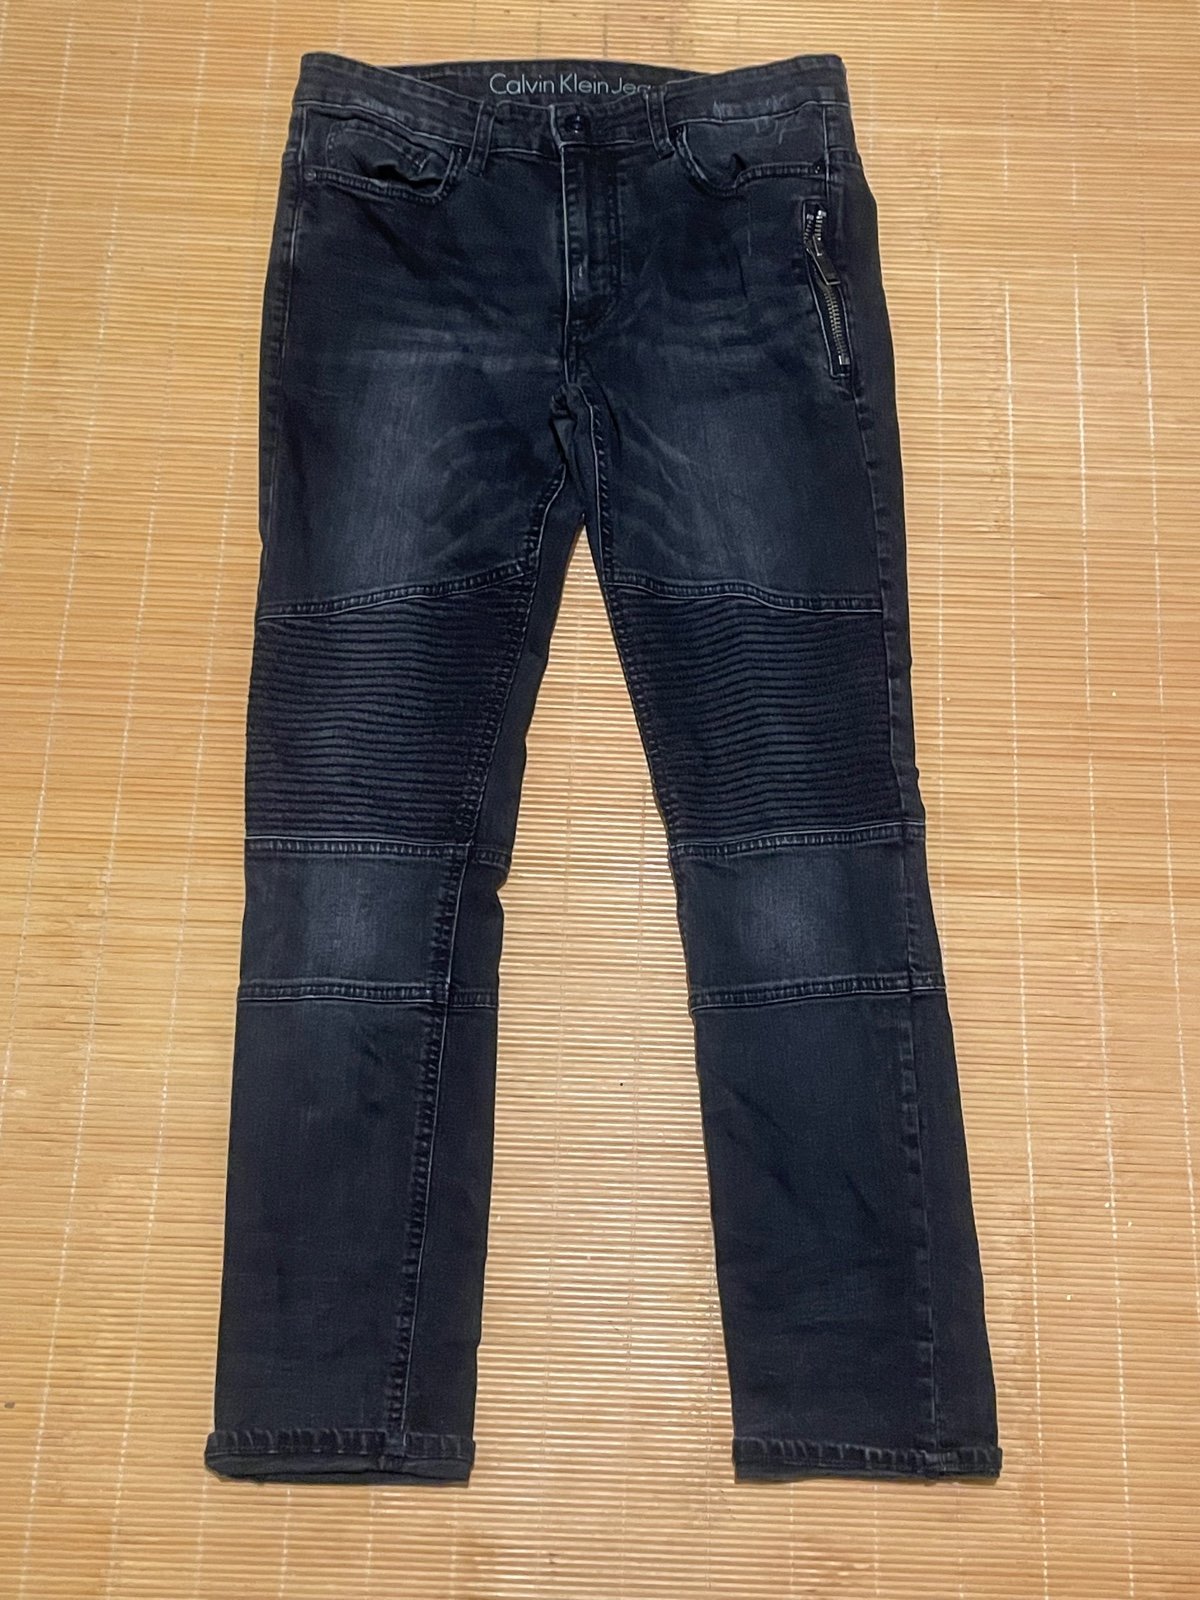 Stylish Calvin Klein jeans fZ4M1m6Wa Buying Cheap